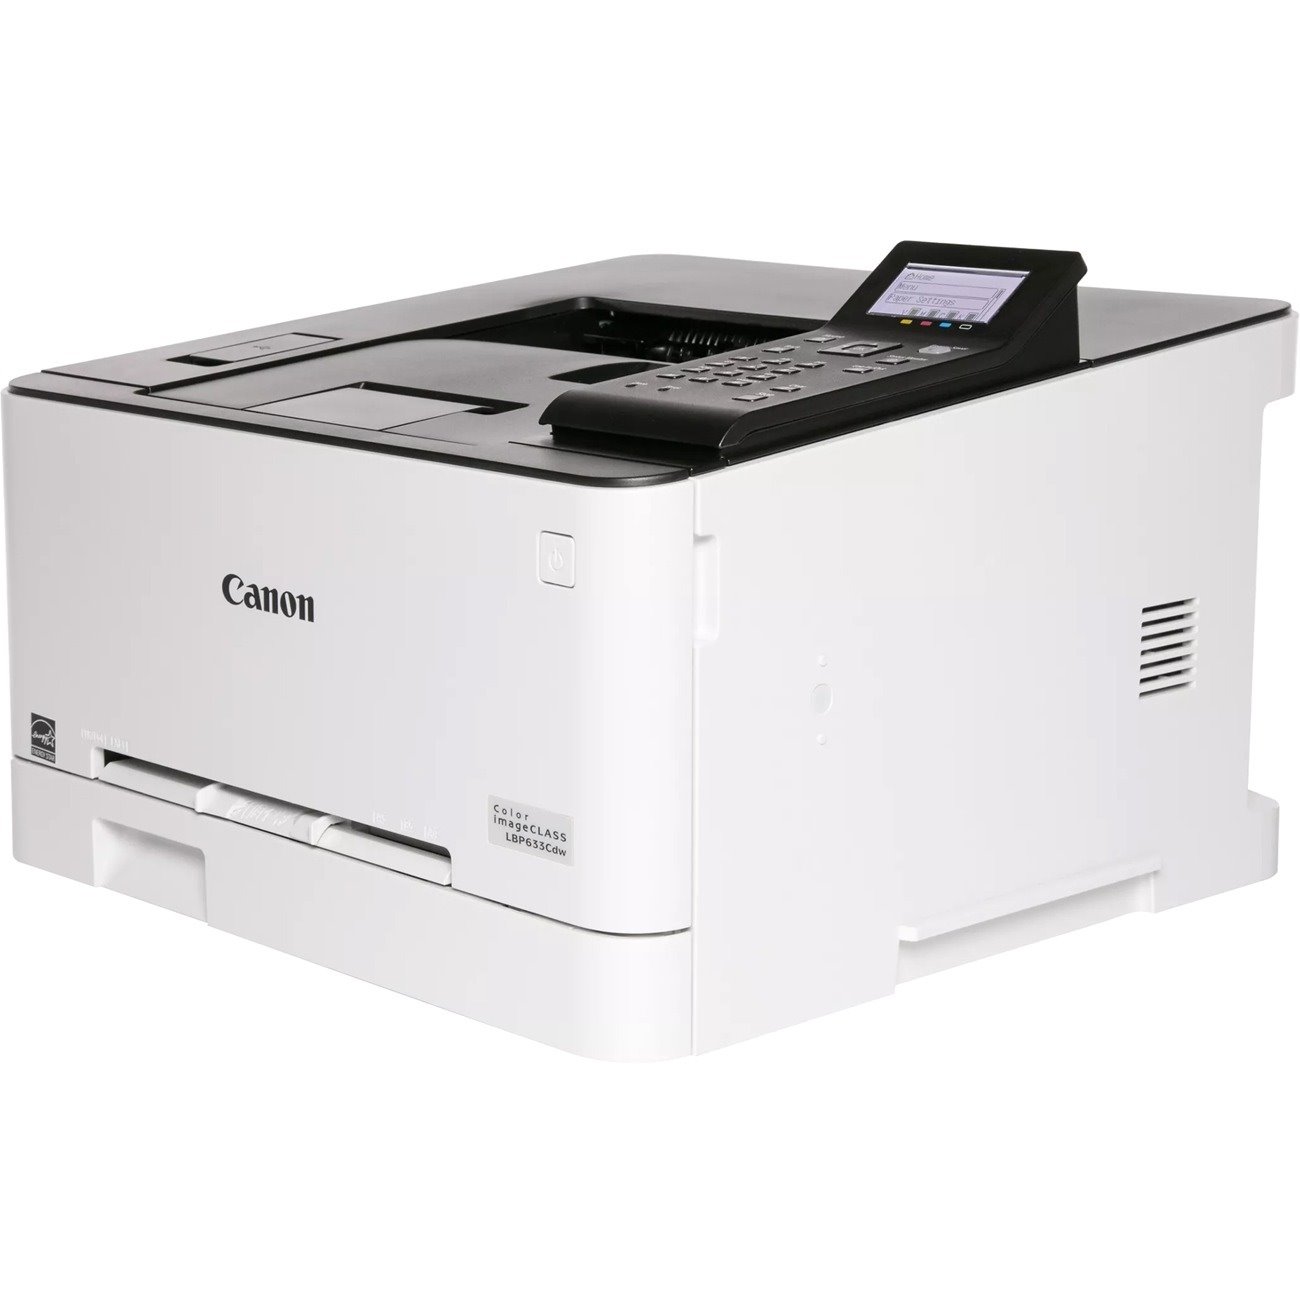 Canon imageCLASS LBP633Cdw Desktop Wireless Laser Printer - Color